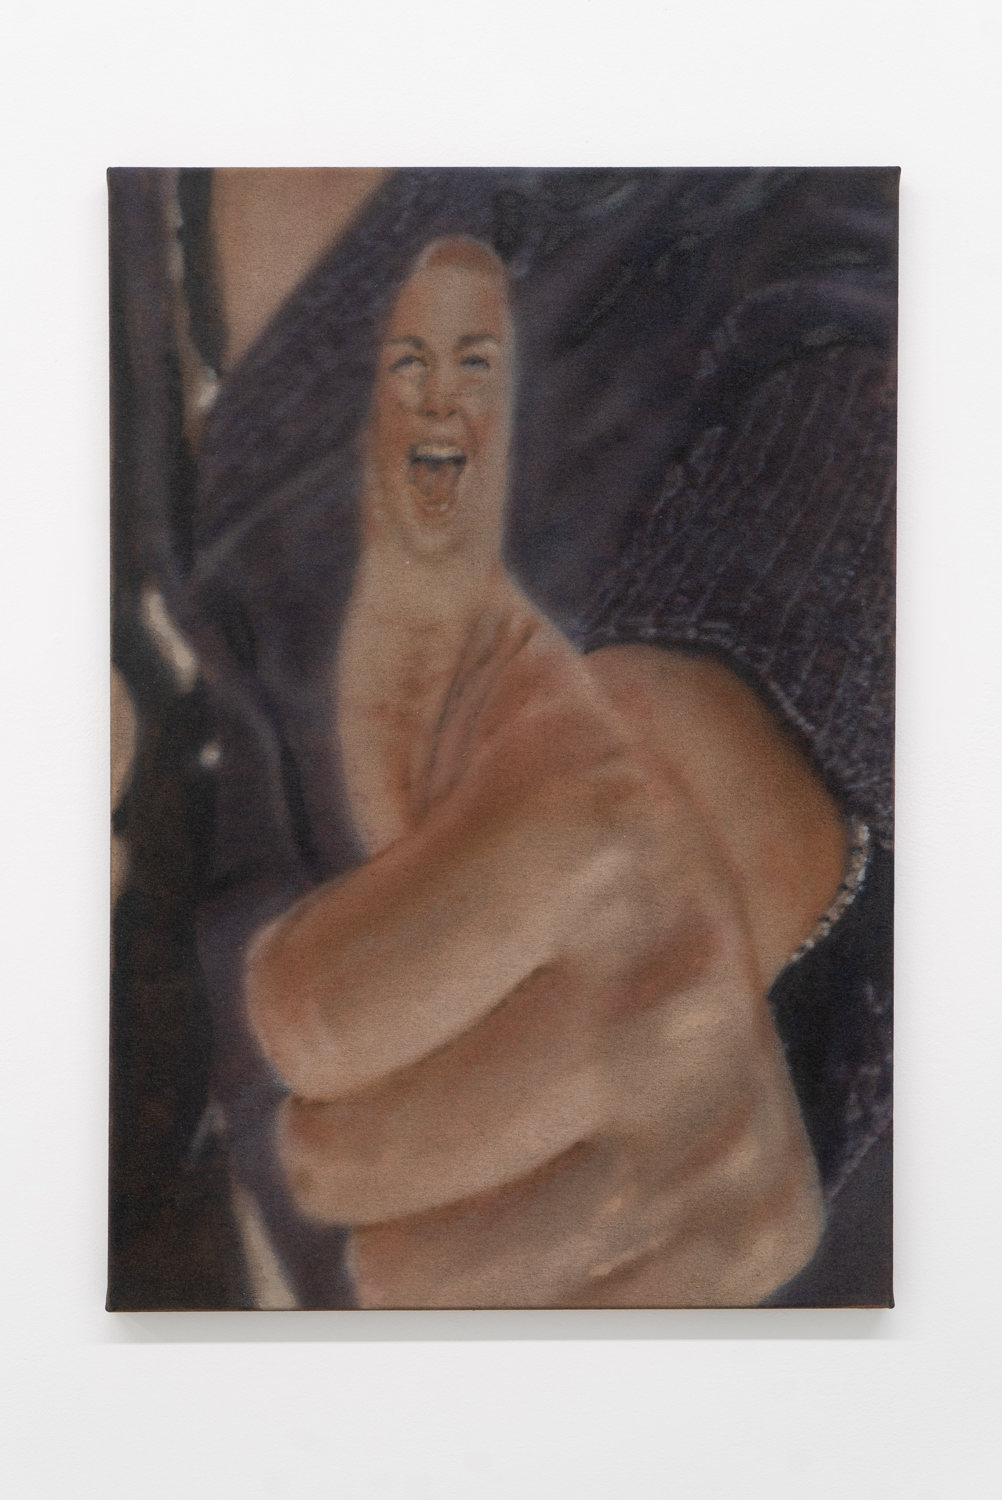 Sarah Fripon, "Sore Thumb", 2022, Acrylic on canvas, 29 x 20 inches